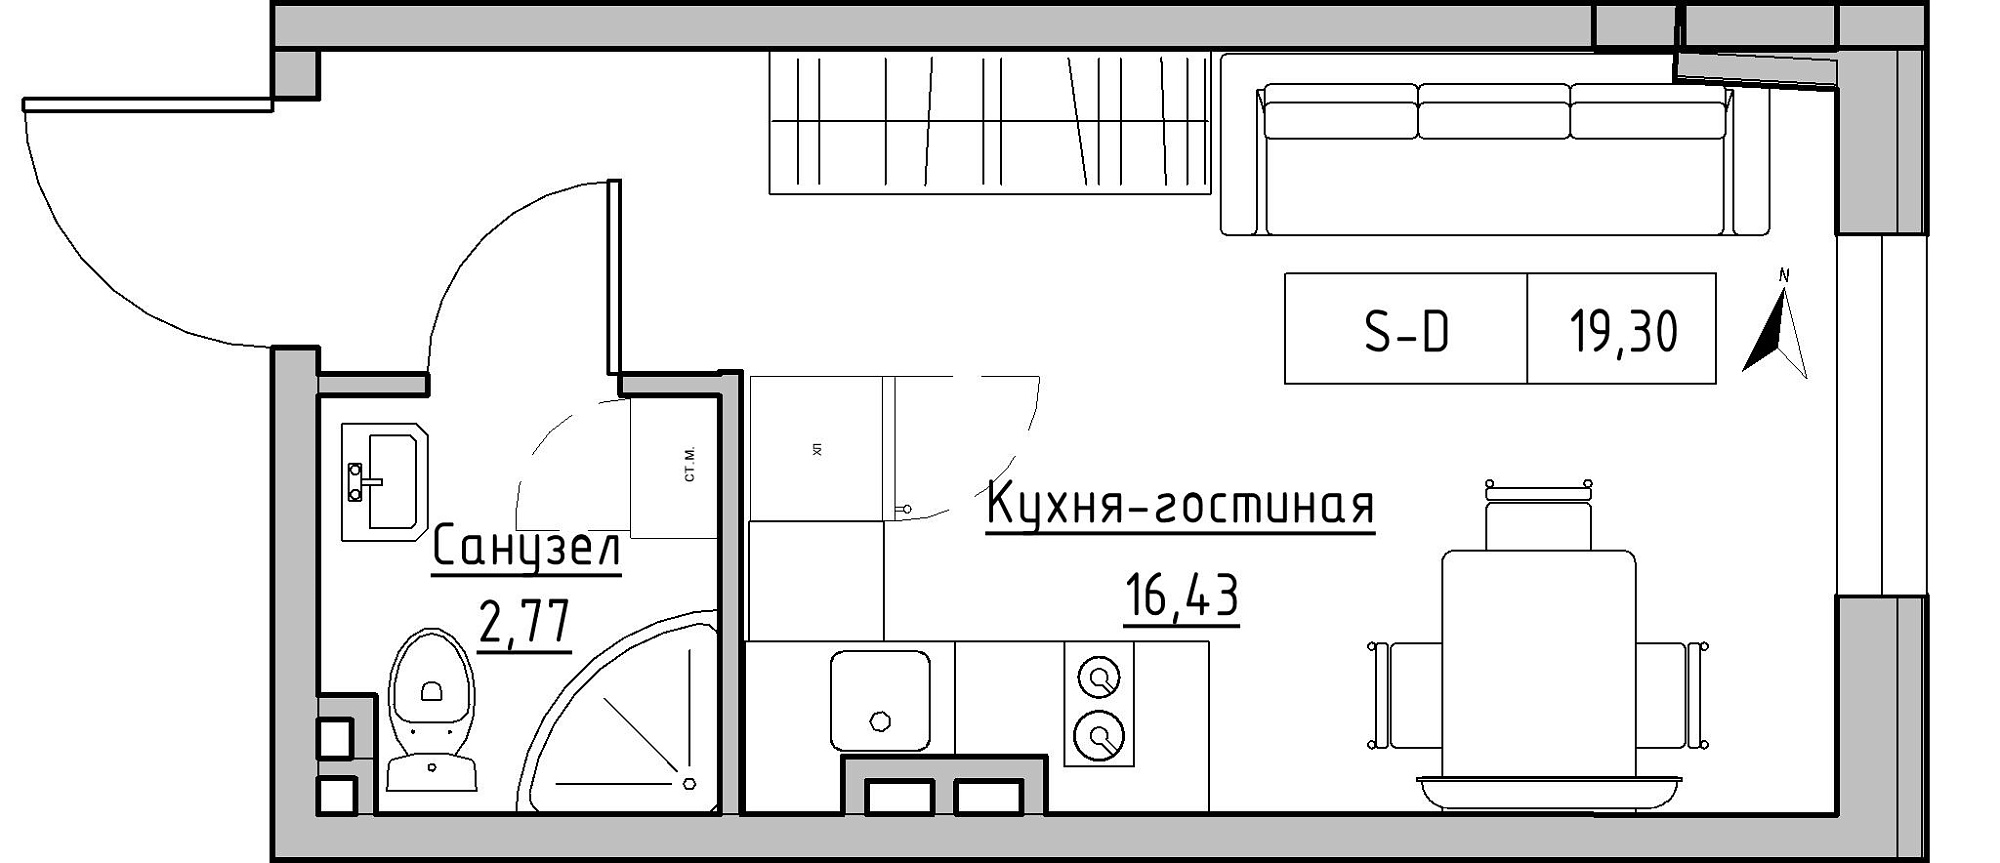 Планировка Smart-квартира площей 19.3м2, KS-024-02/0014.